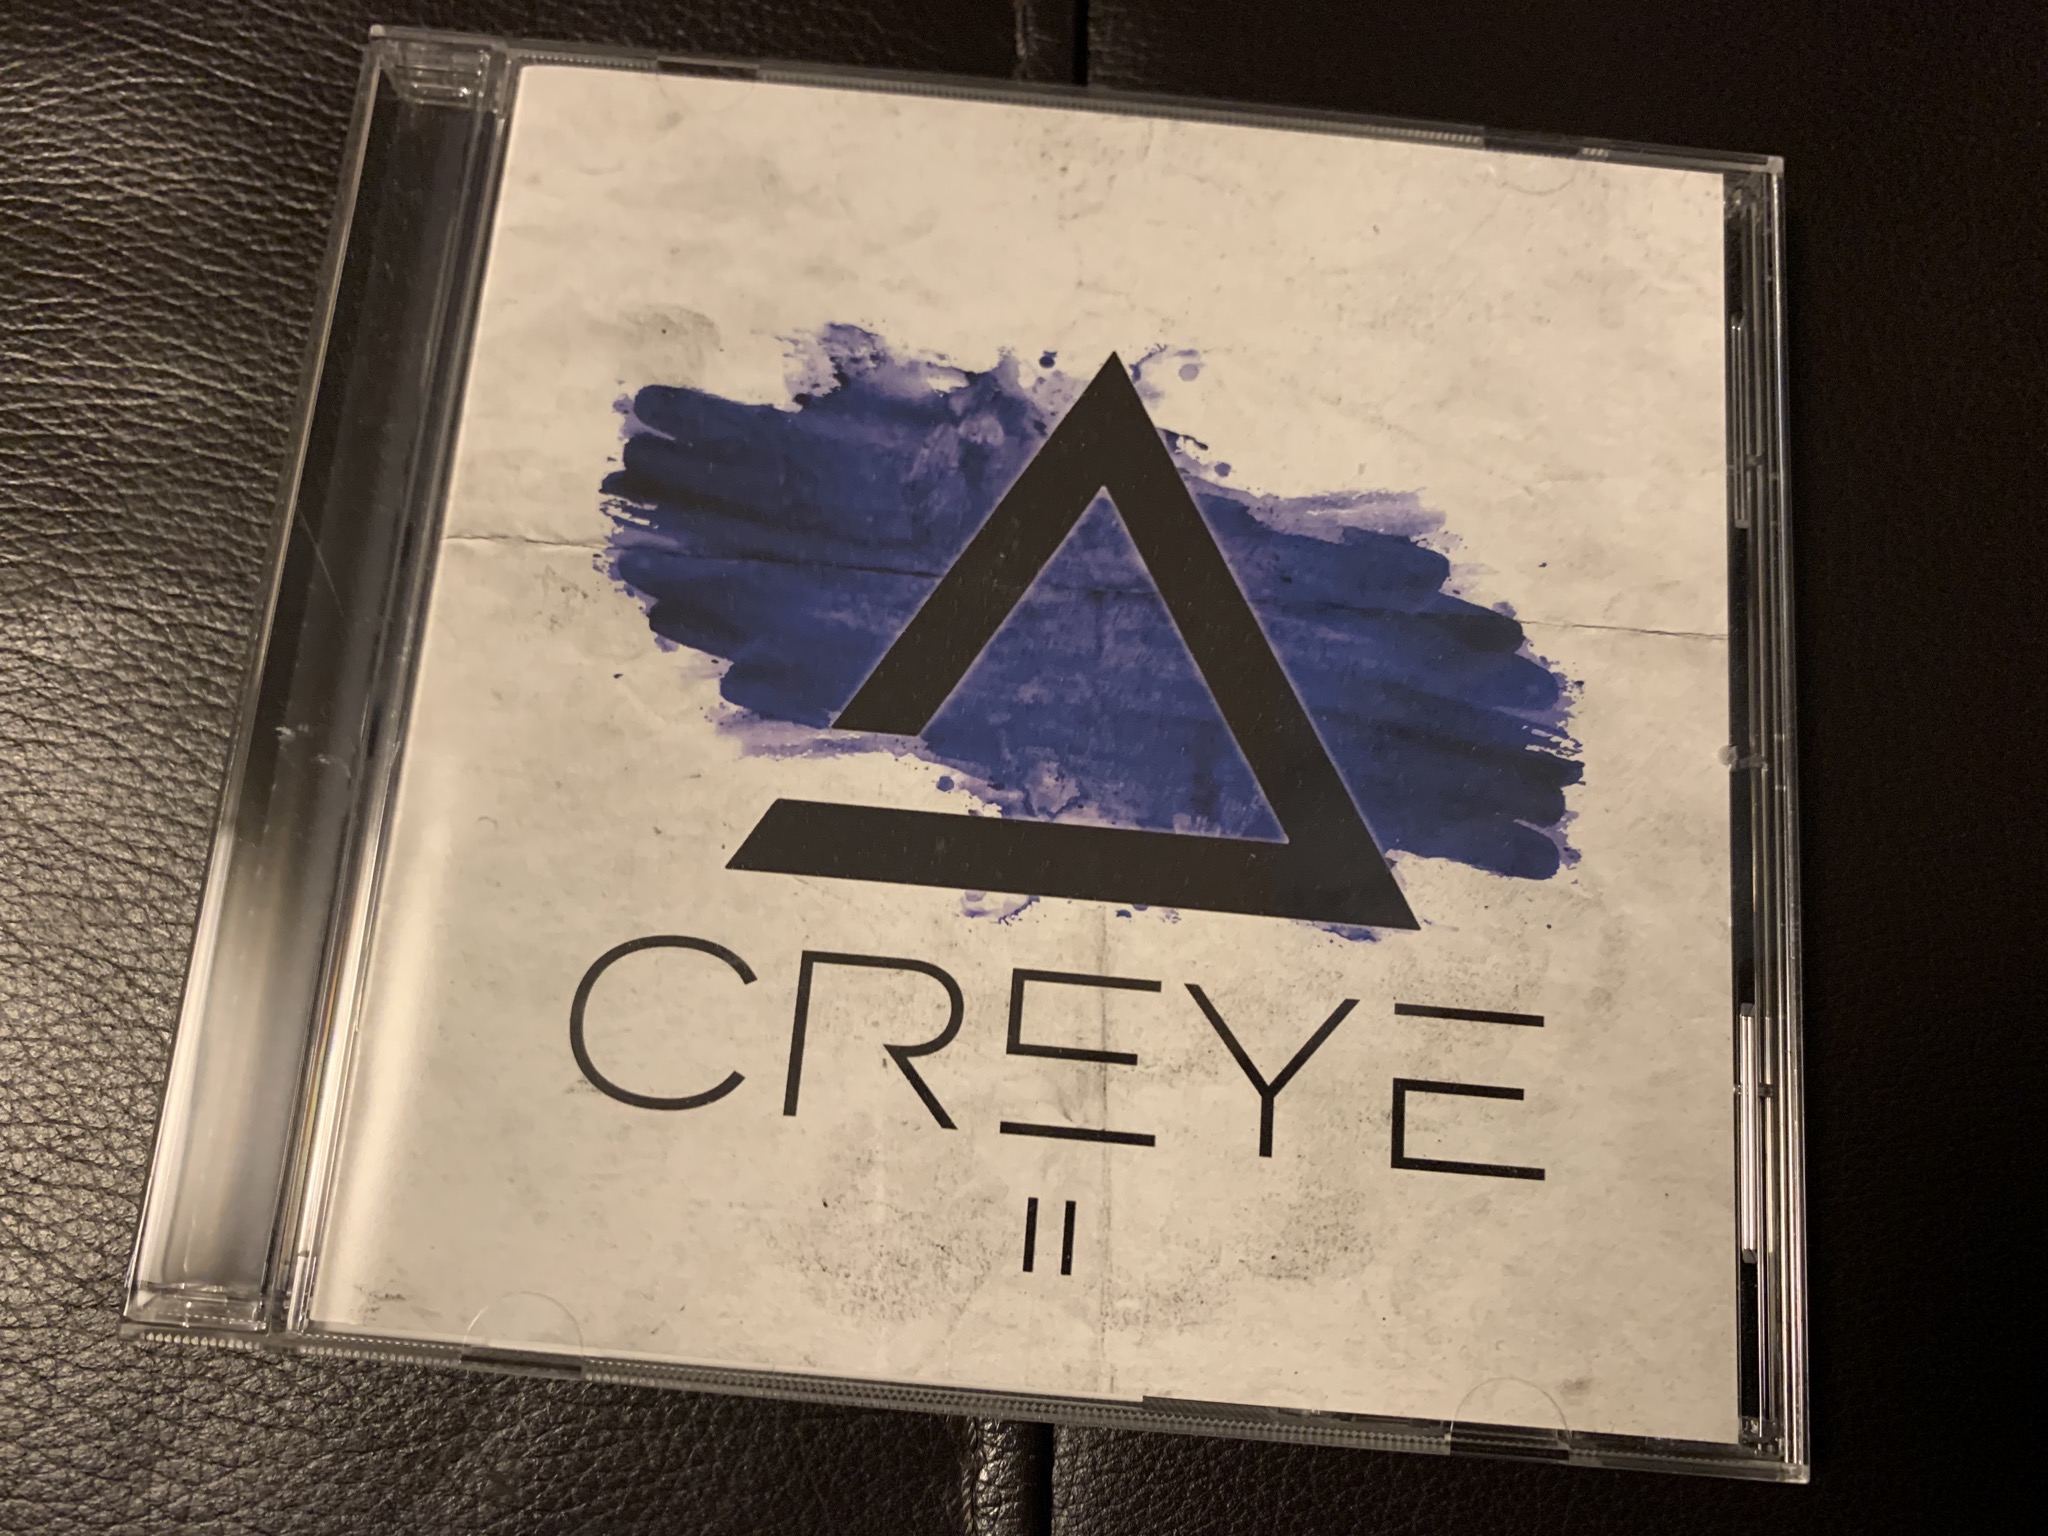 Creyeの2ndアルバム『Ⅱ』が素晴らしい